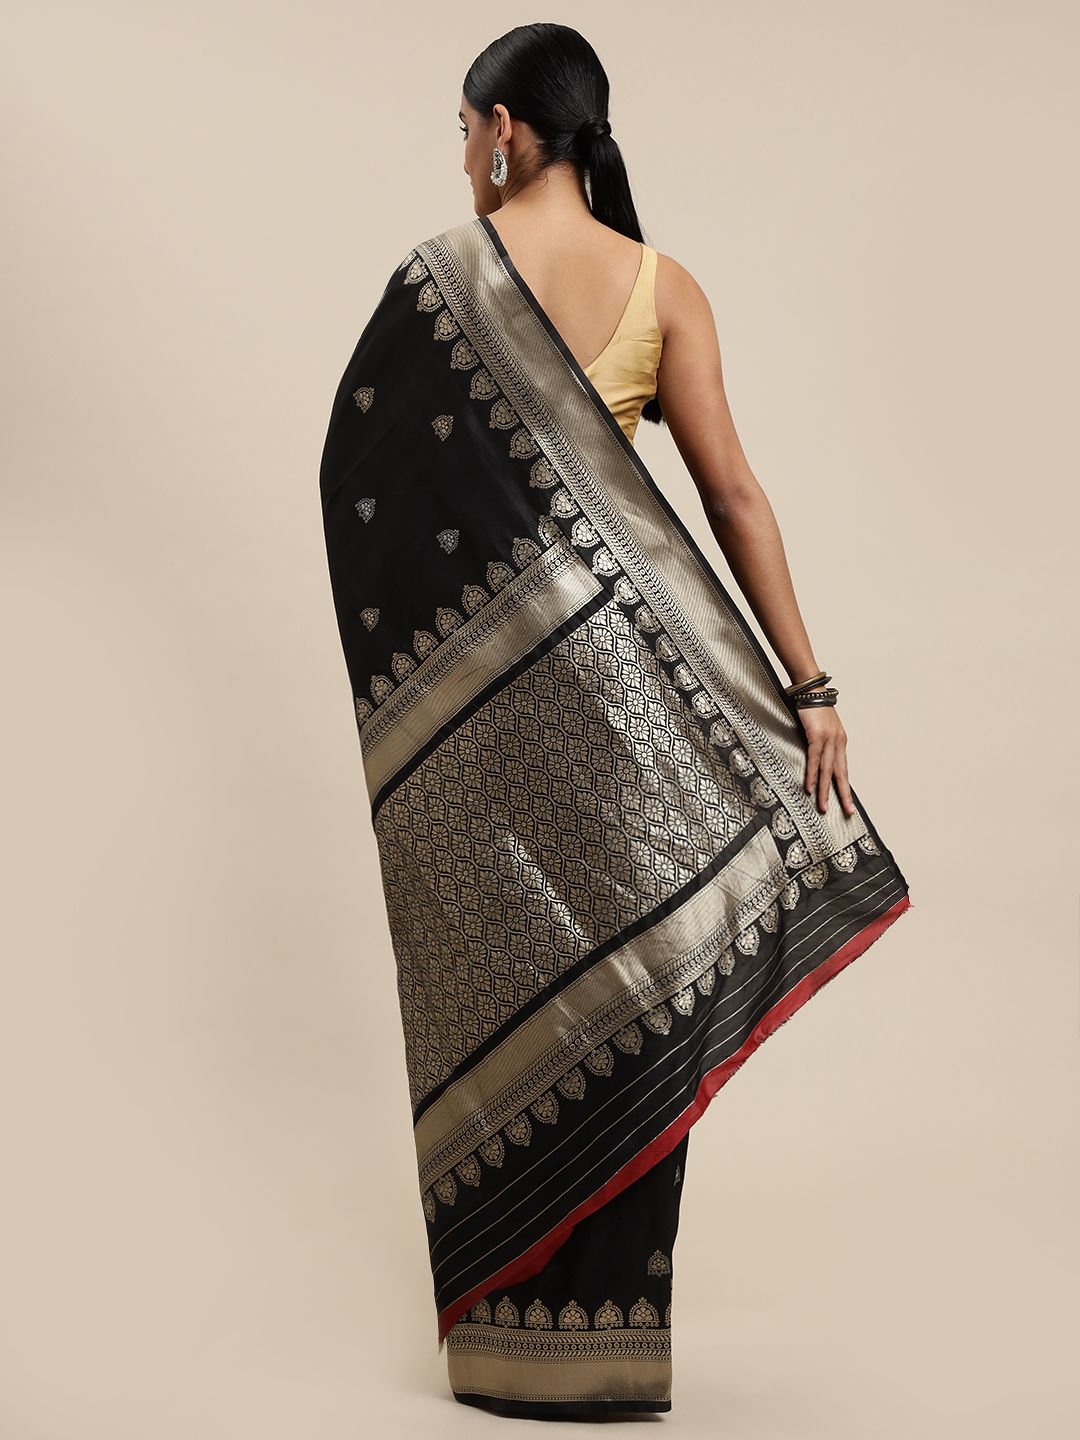 Black Color Bollywood-inspired Banarasi silk sarees